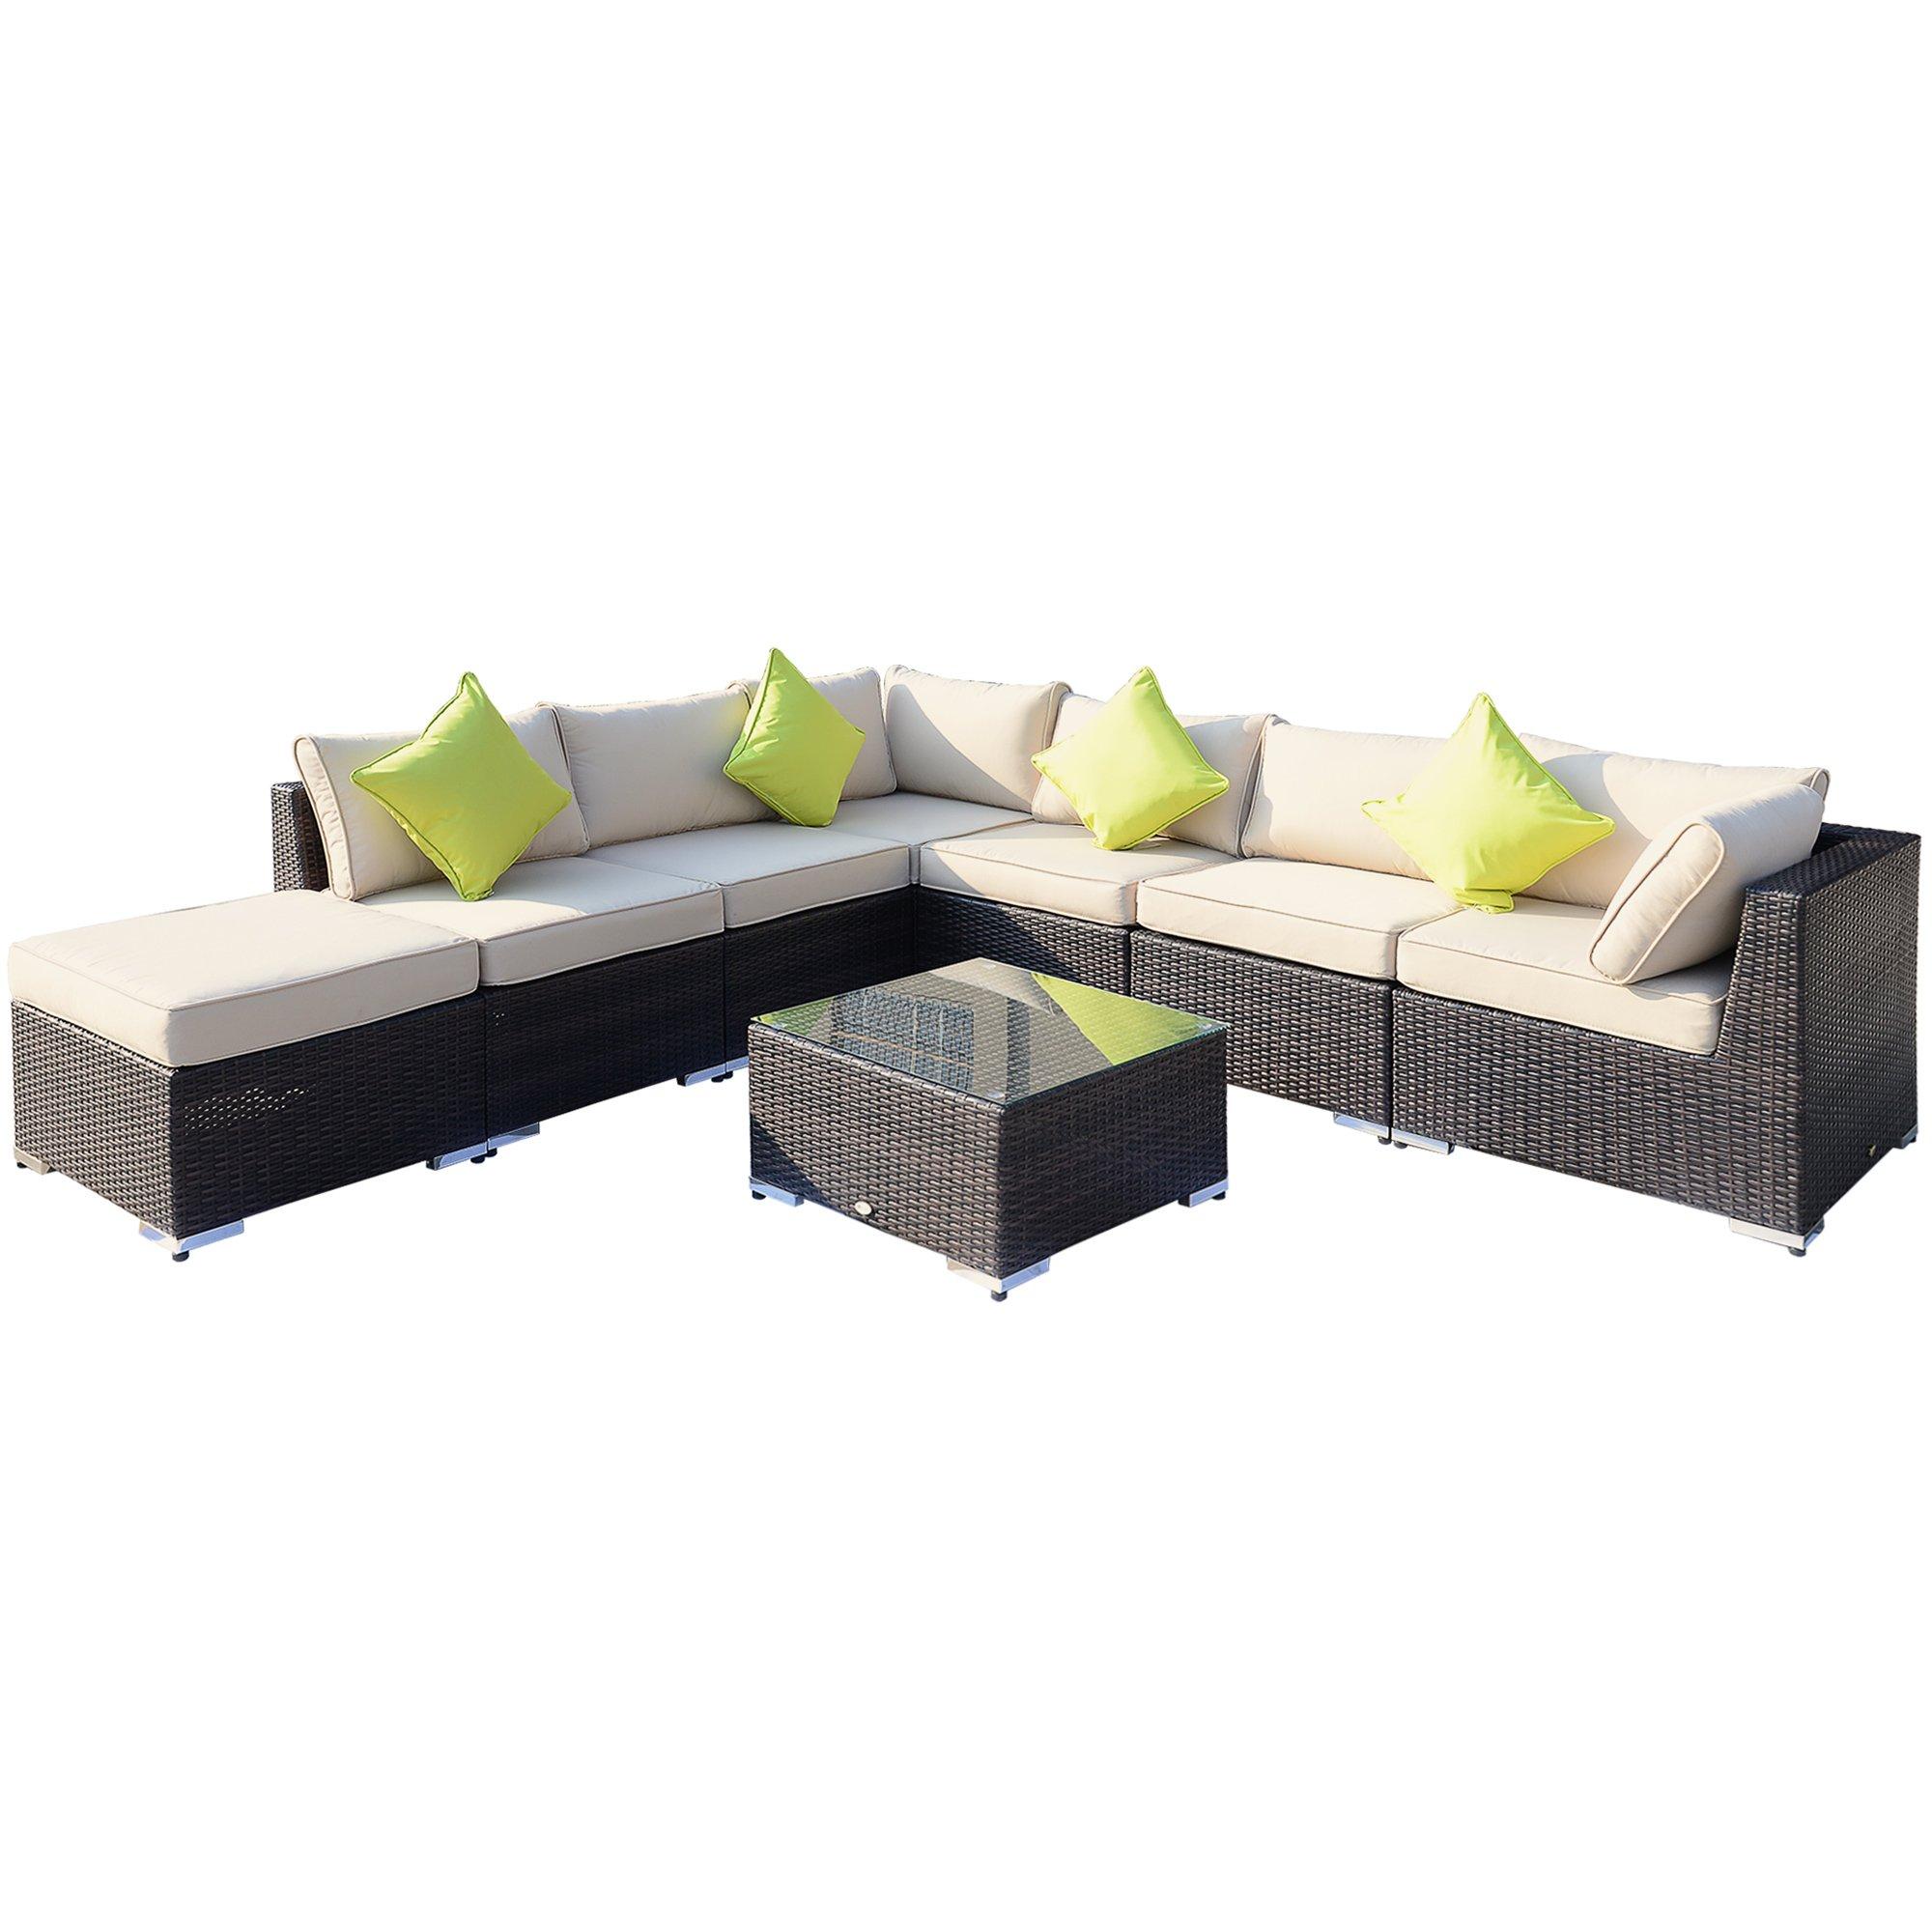 8PC Rattan Outdoor Garden Patio Furniture Corner Sofa Set Wicker Black Aluminium